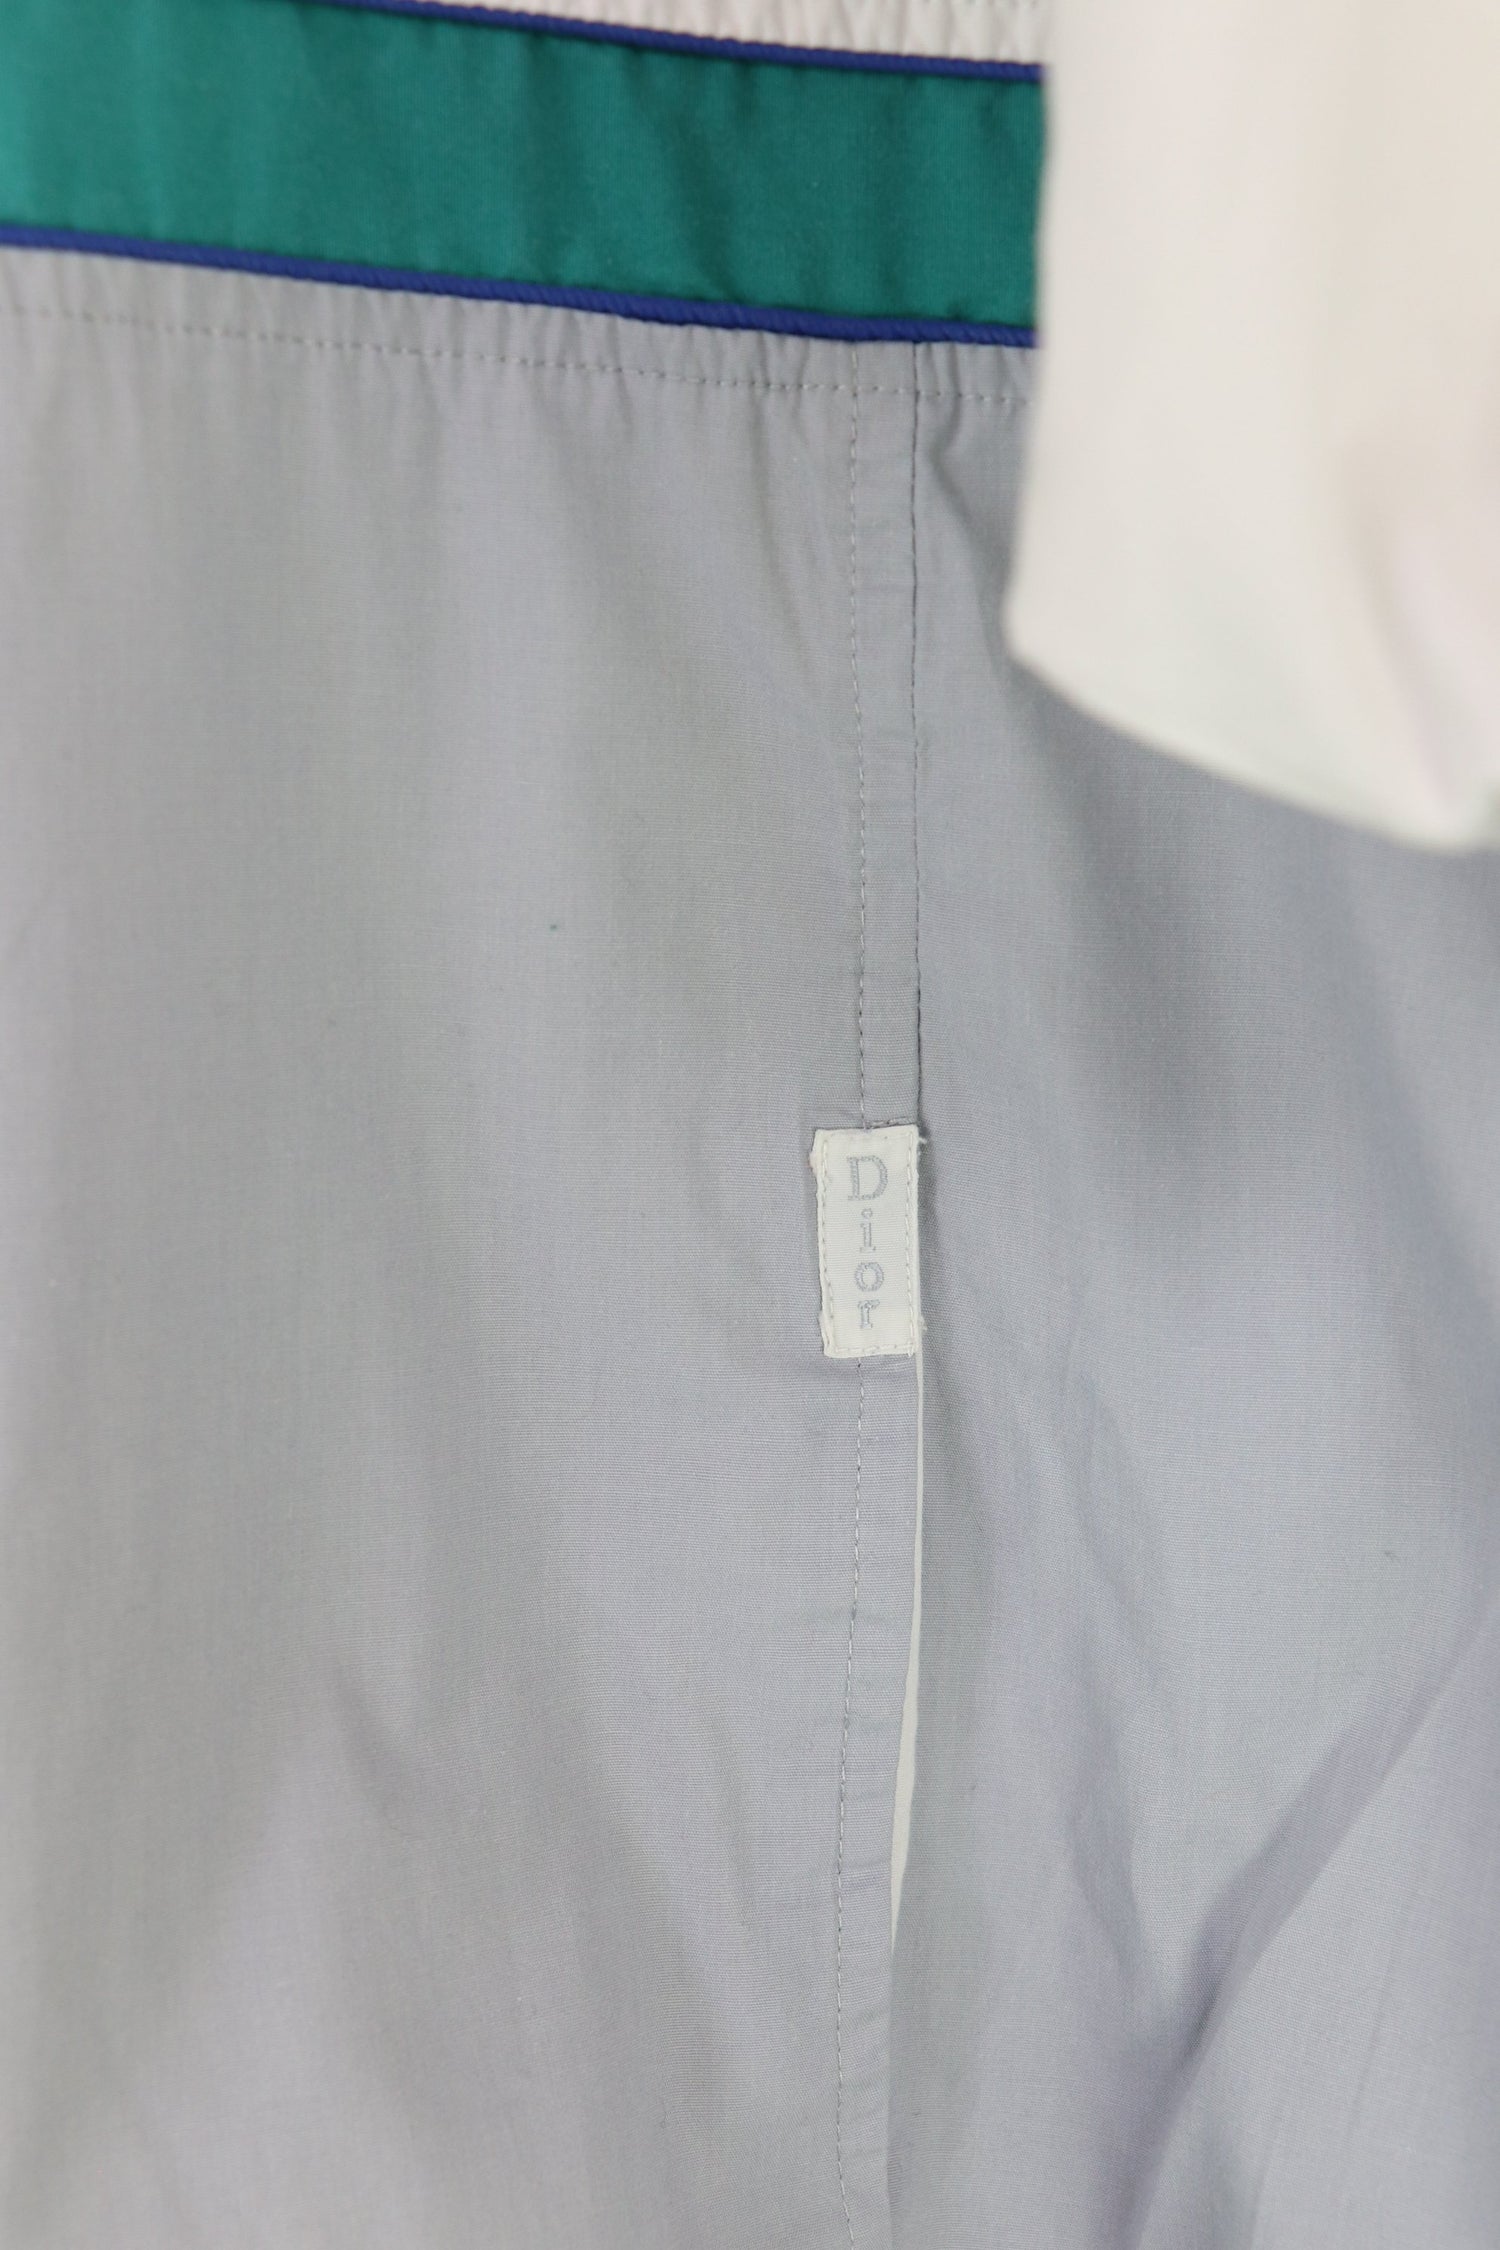 Christian Dior Polo Shirt Grey/White Small